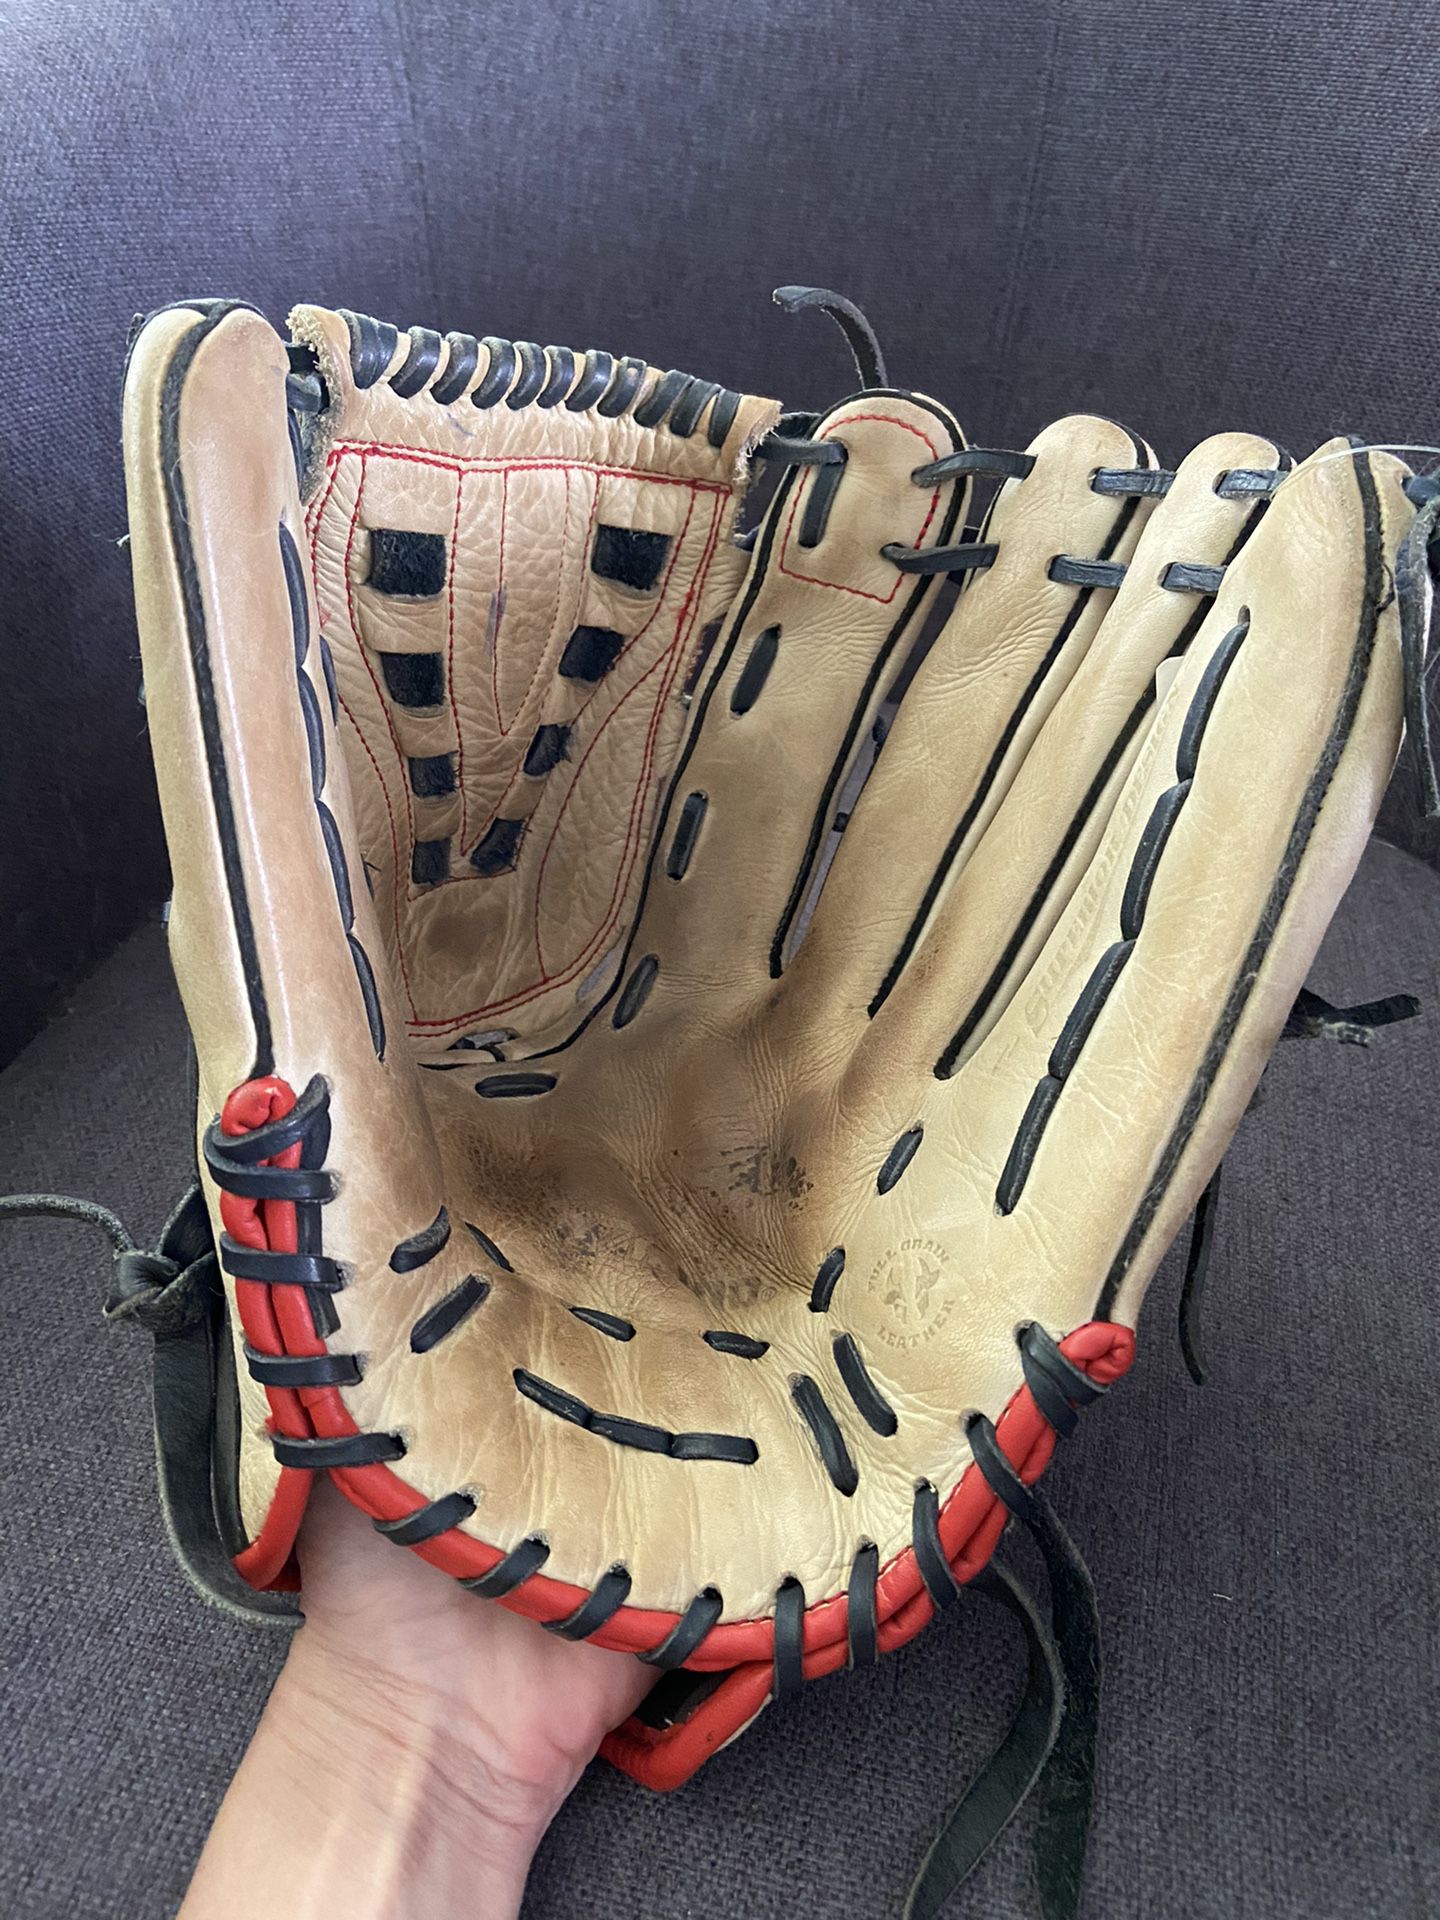 Mizuno GCR1300 13” Softball glove